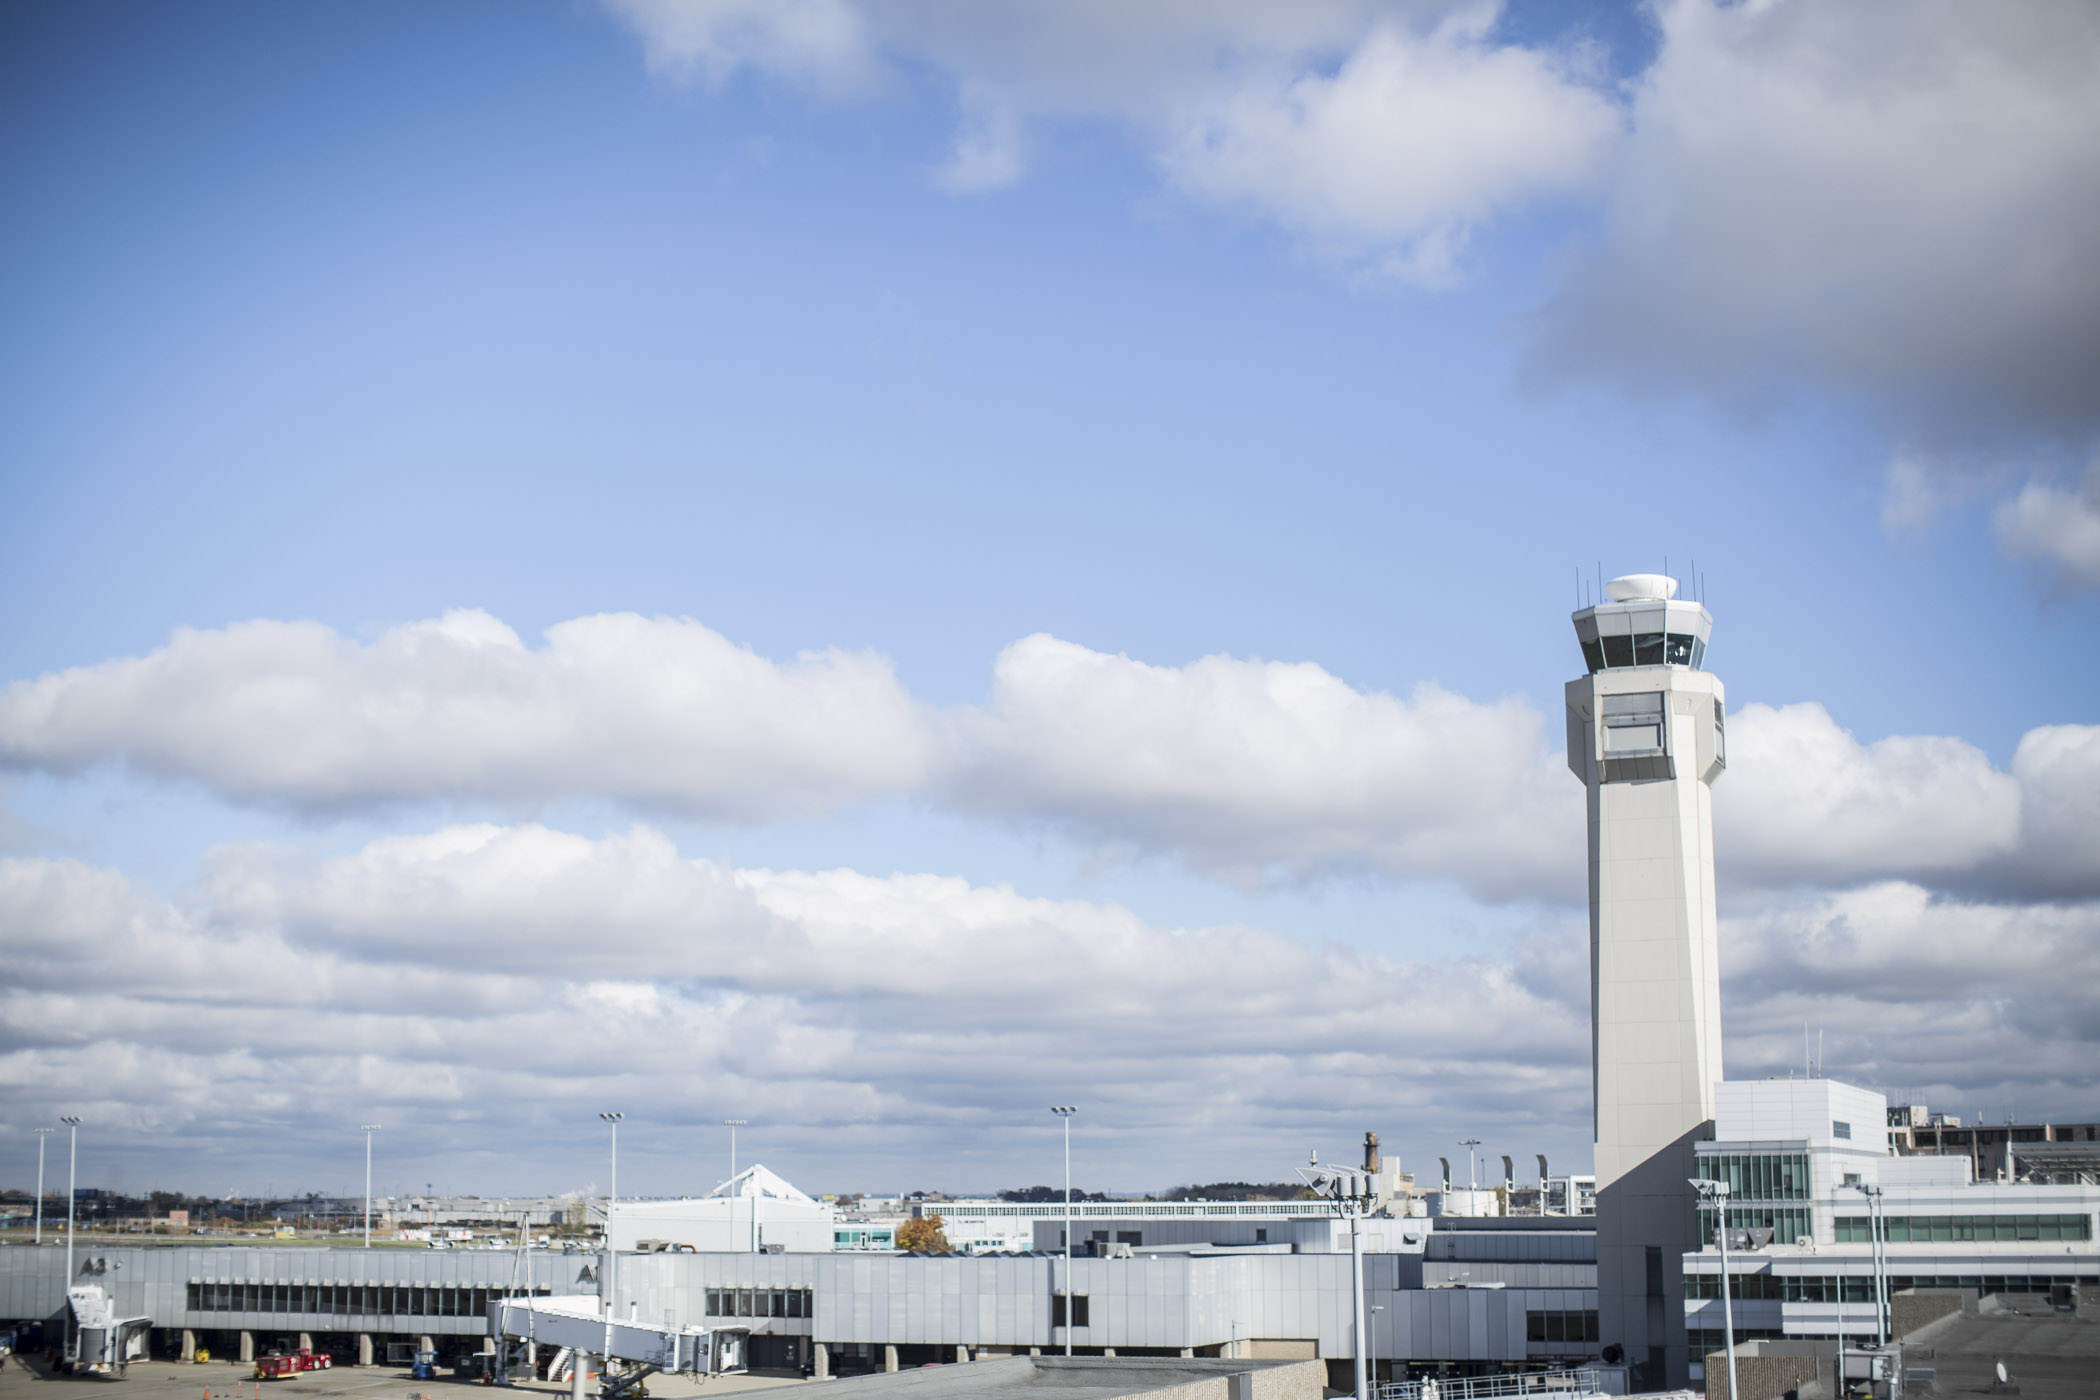 Cleveland Hopkins Airport Enters Next Phase in Terminal Modernization Development Program